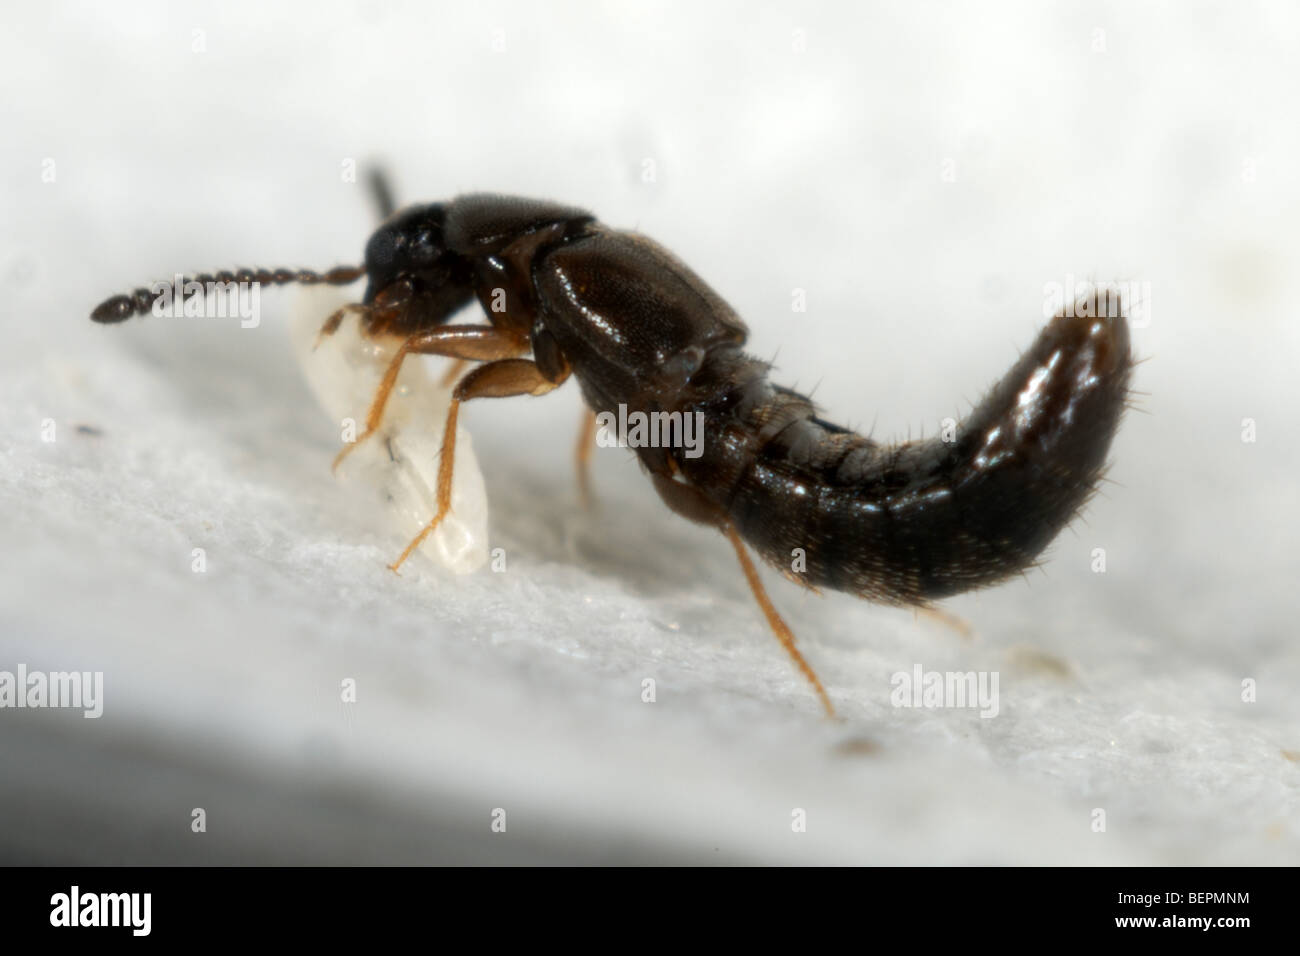 Adult predatory greenhouse rove beetle, Dalotia coriaria, feeding on a dipteran larva used for biological control Stock Photo